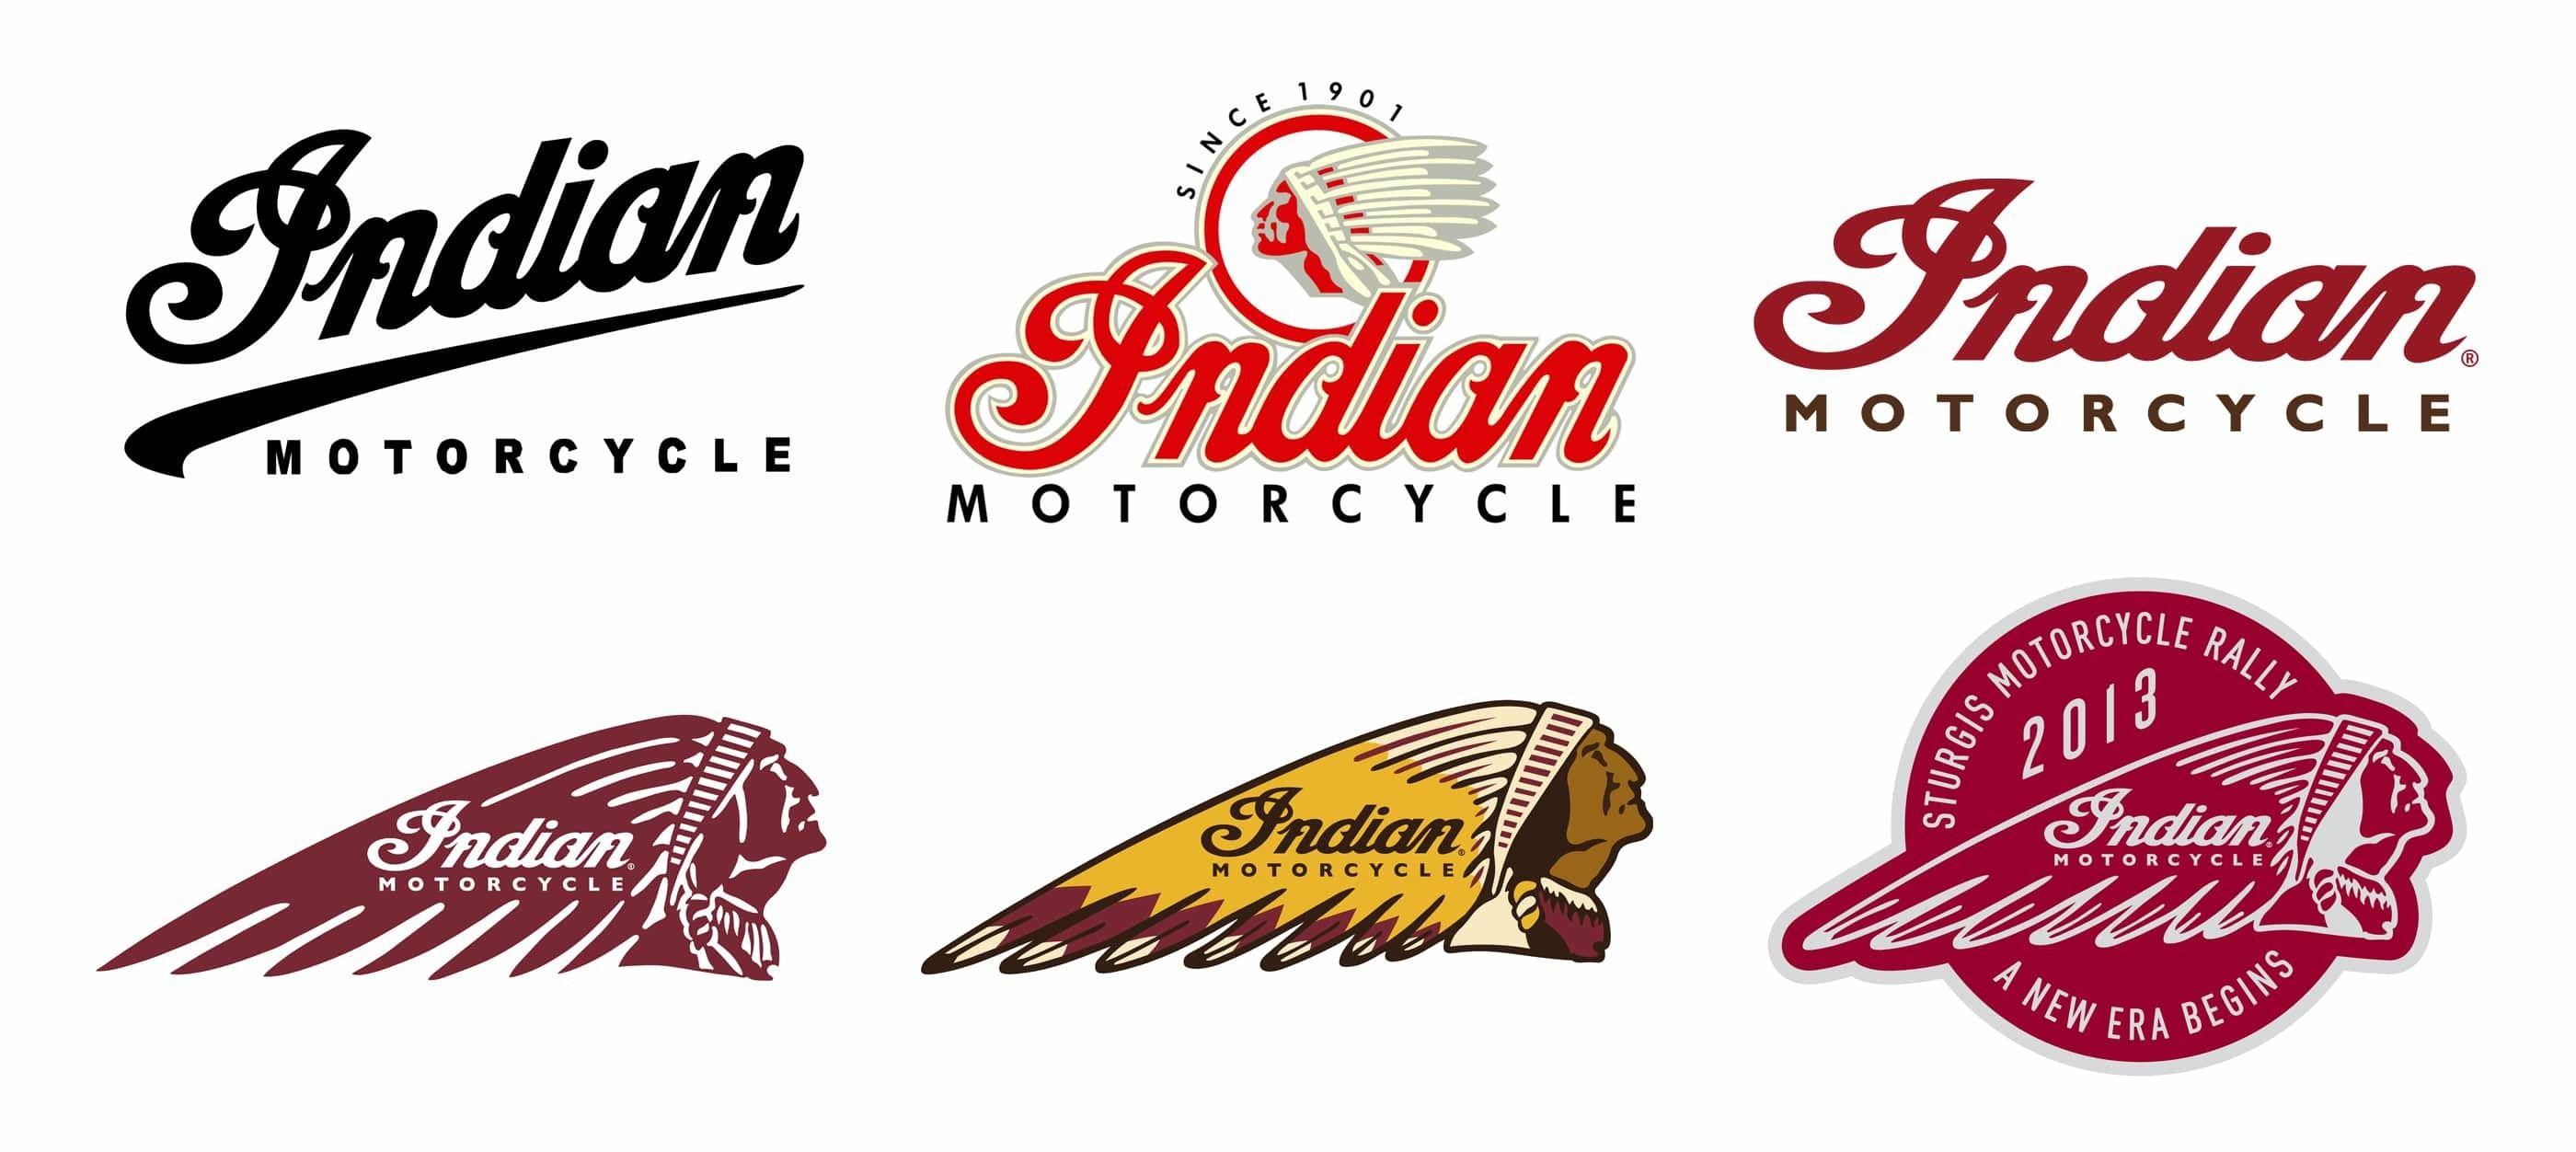 Indian Motorcycle Wallpaper